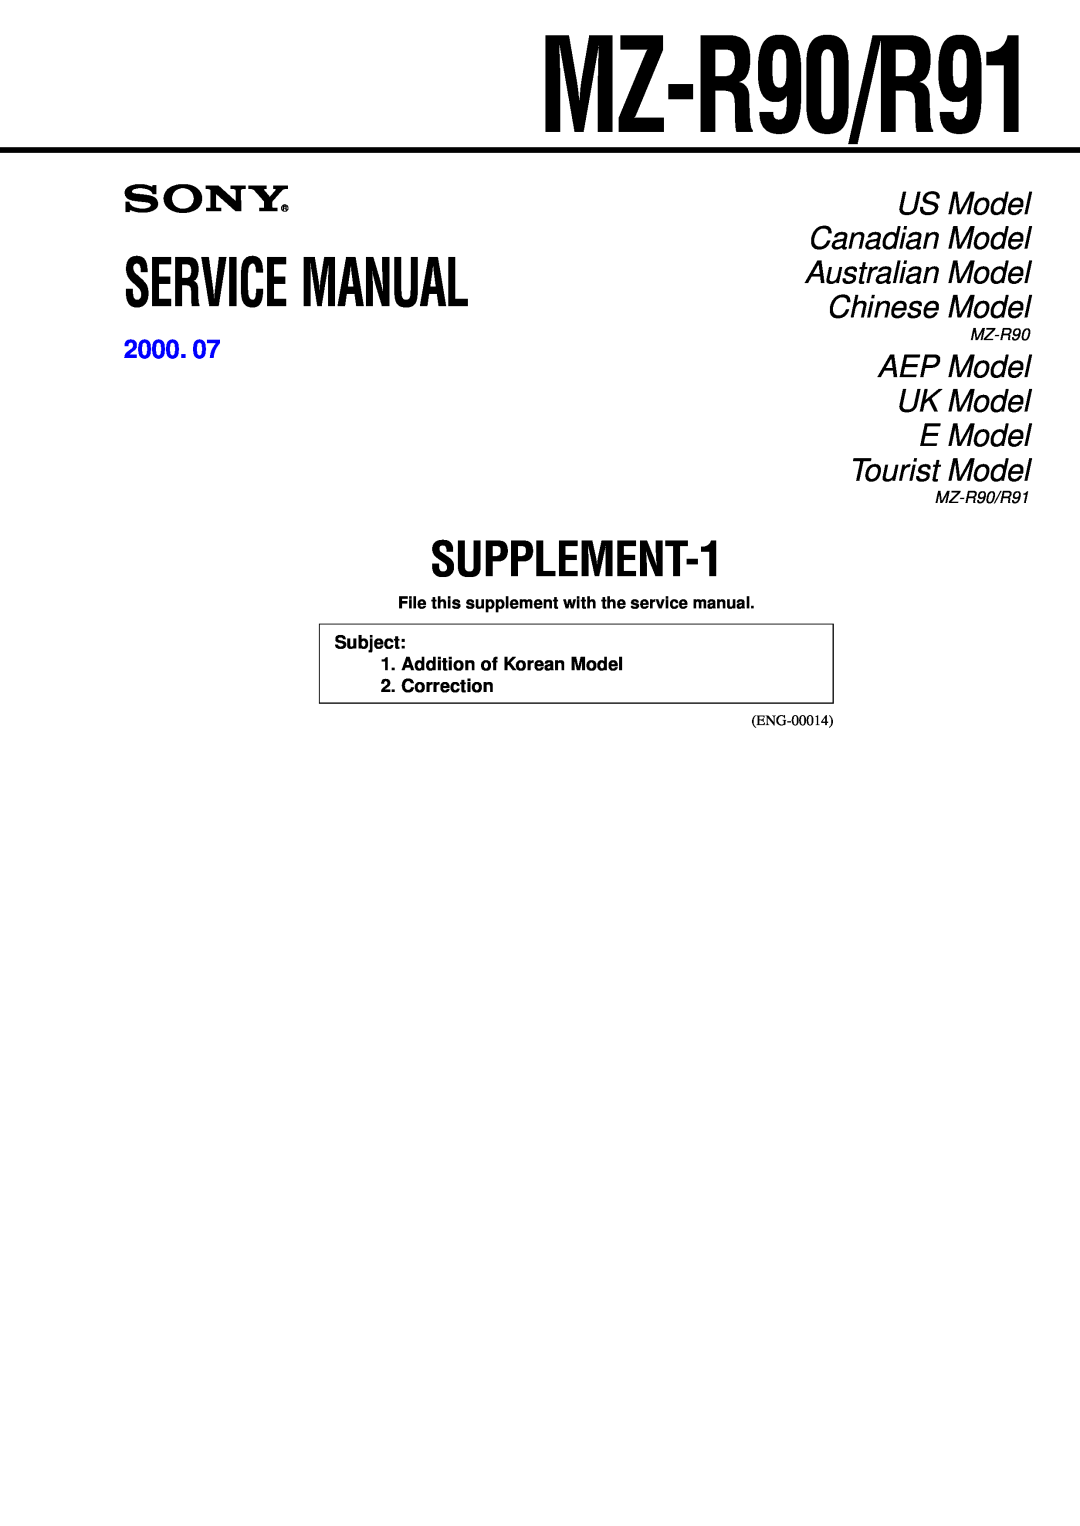 Sony MZ-R91 service manual 2000, MZ-R90/R91, SUPPLEMENT-1, US Model Canadian Model Australian Model, Chinese Model 